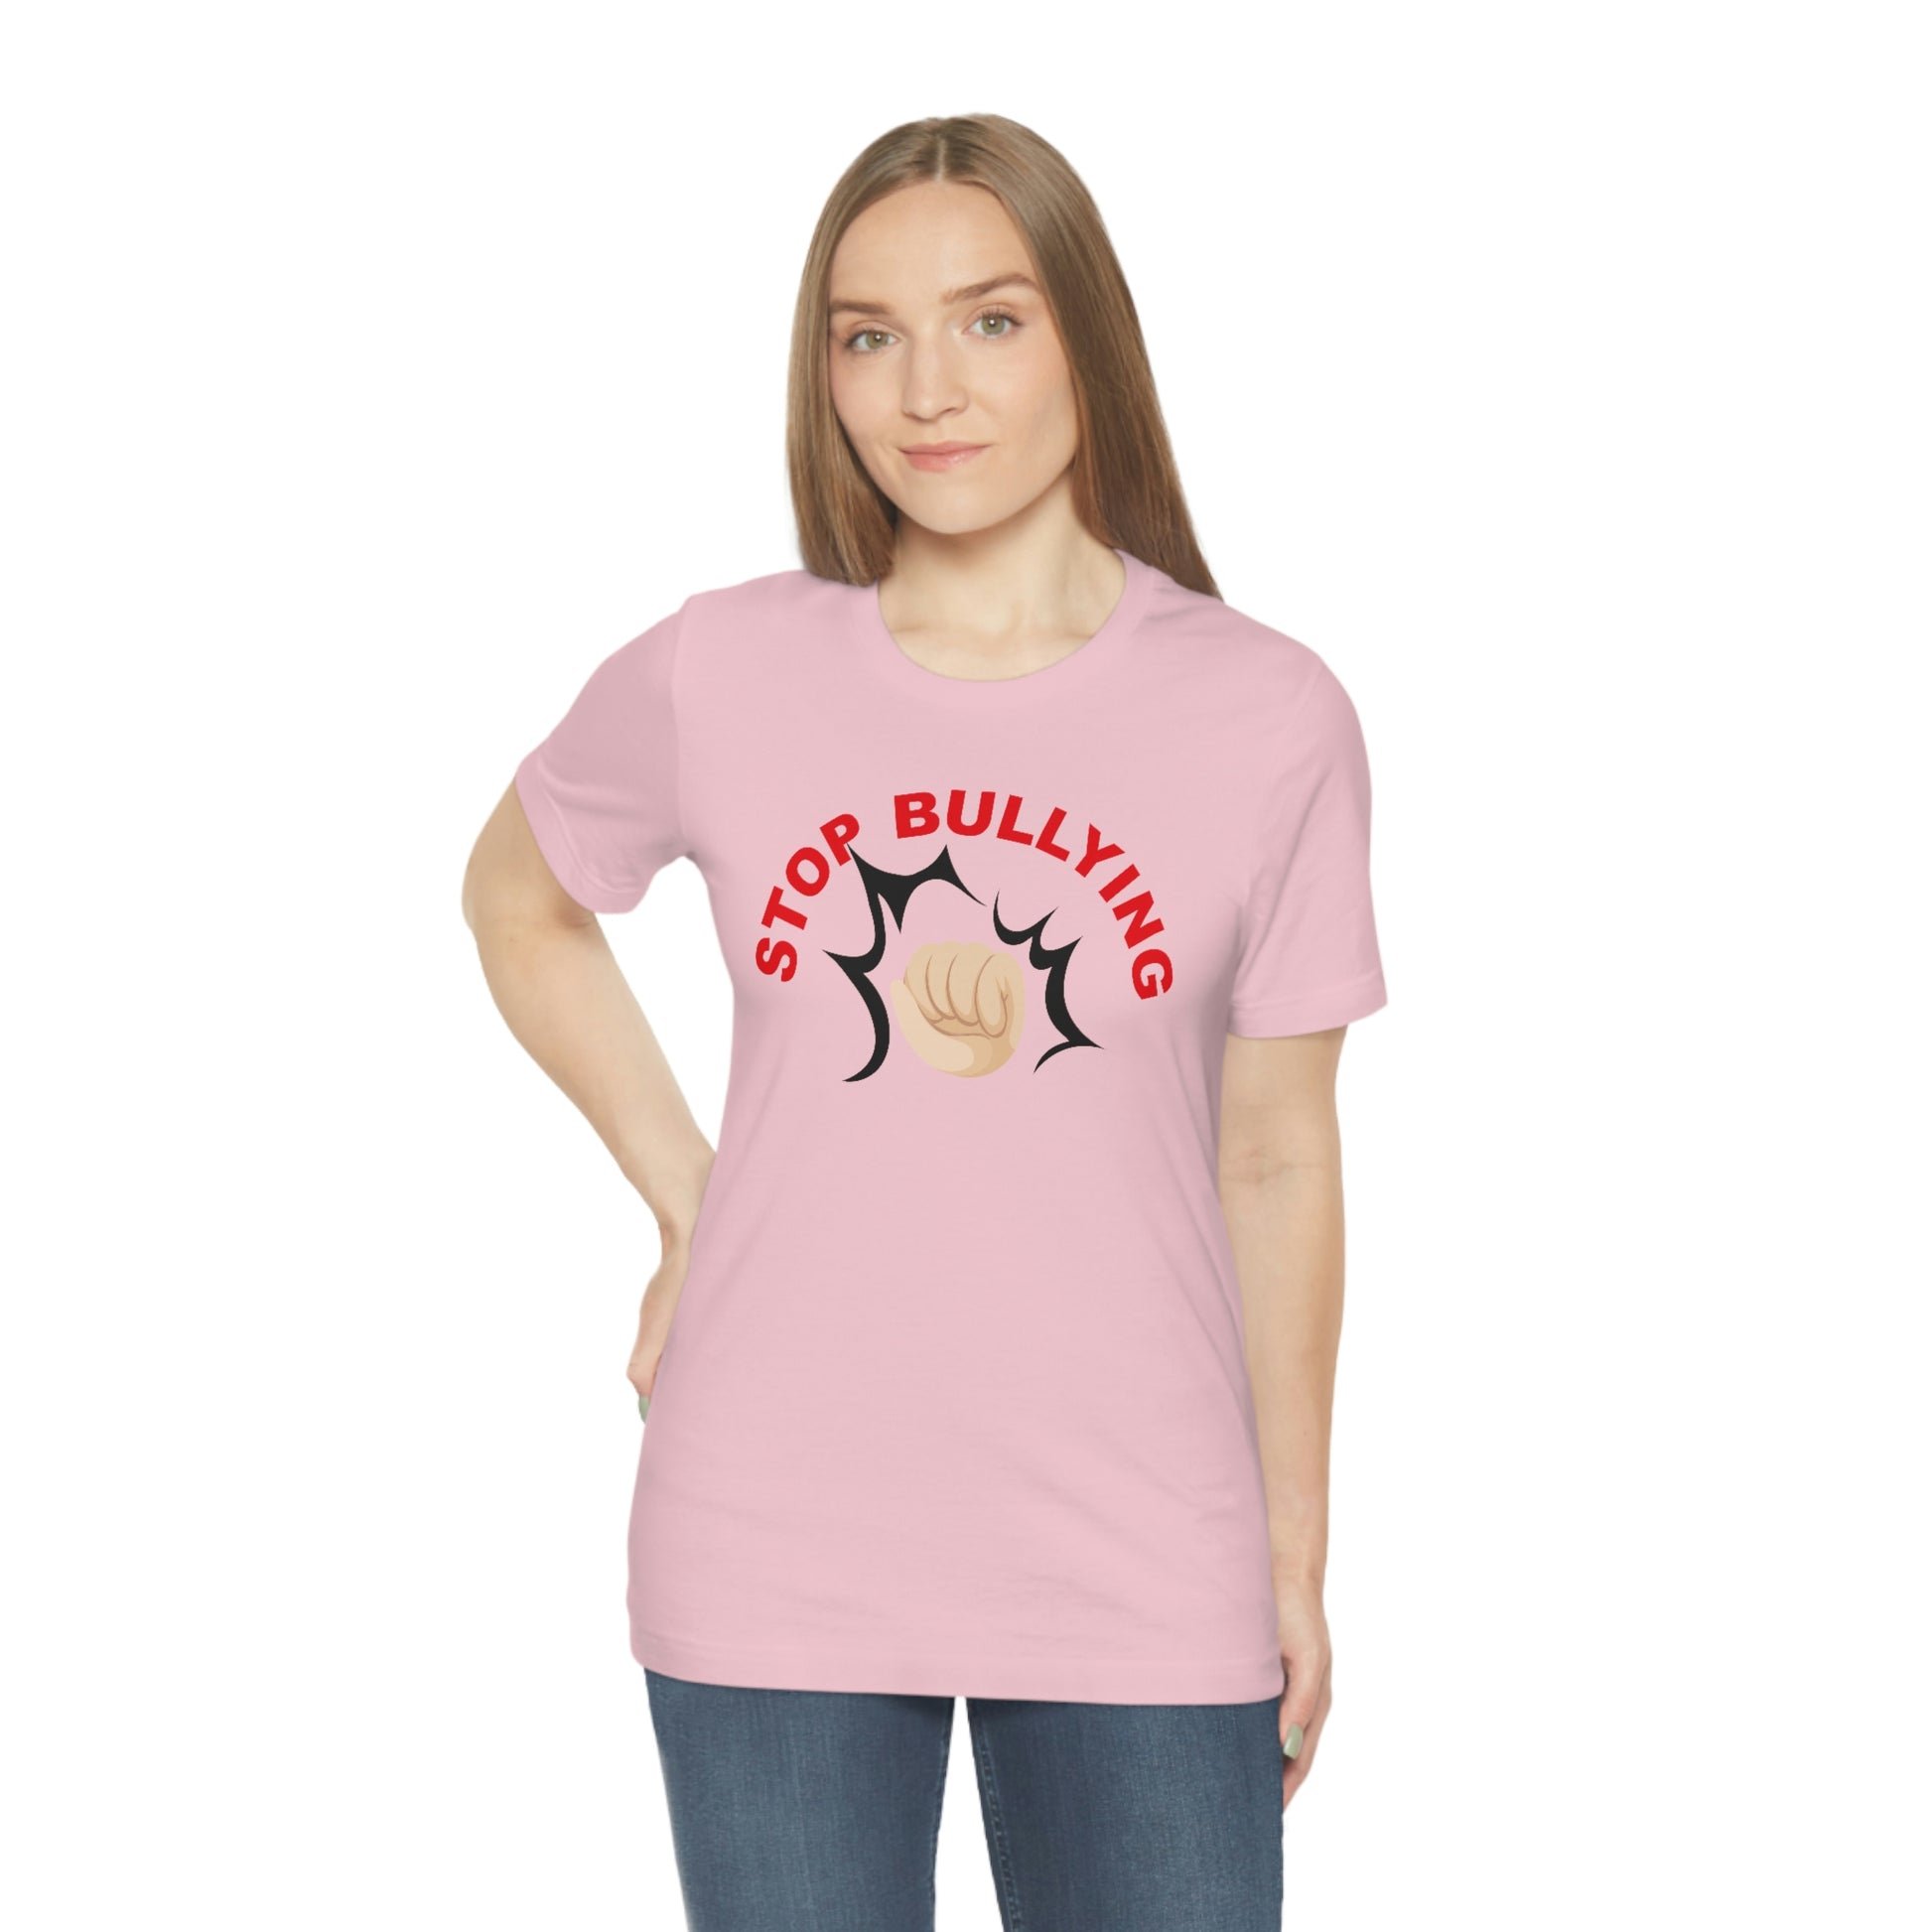 Stop Bullying Tshirt, Anti Bully Men Women Adult Aesthetic Graphic Crewneck Tee Shirt Top Starcove Fashion